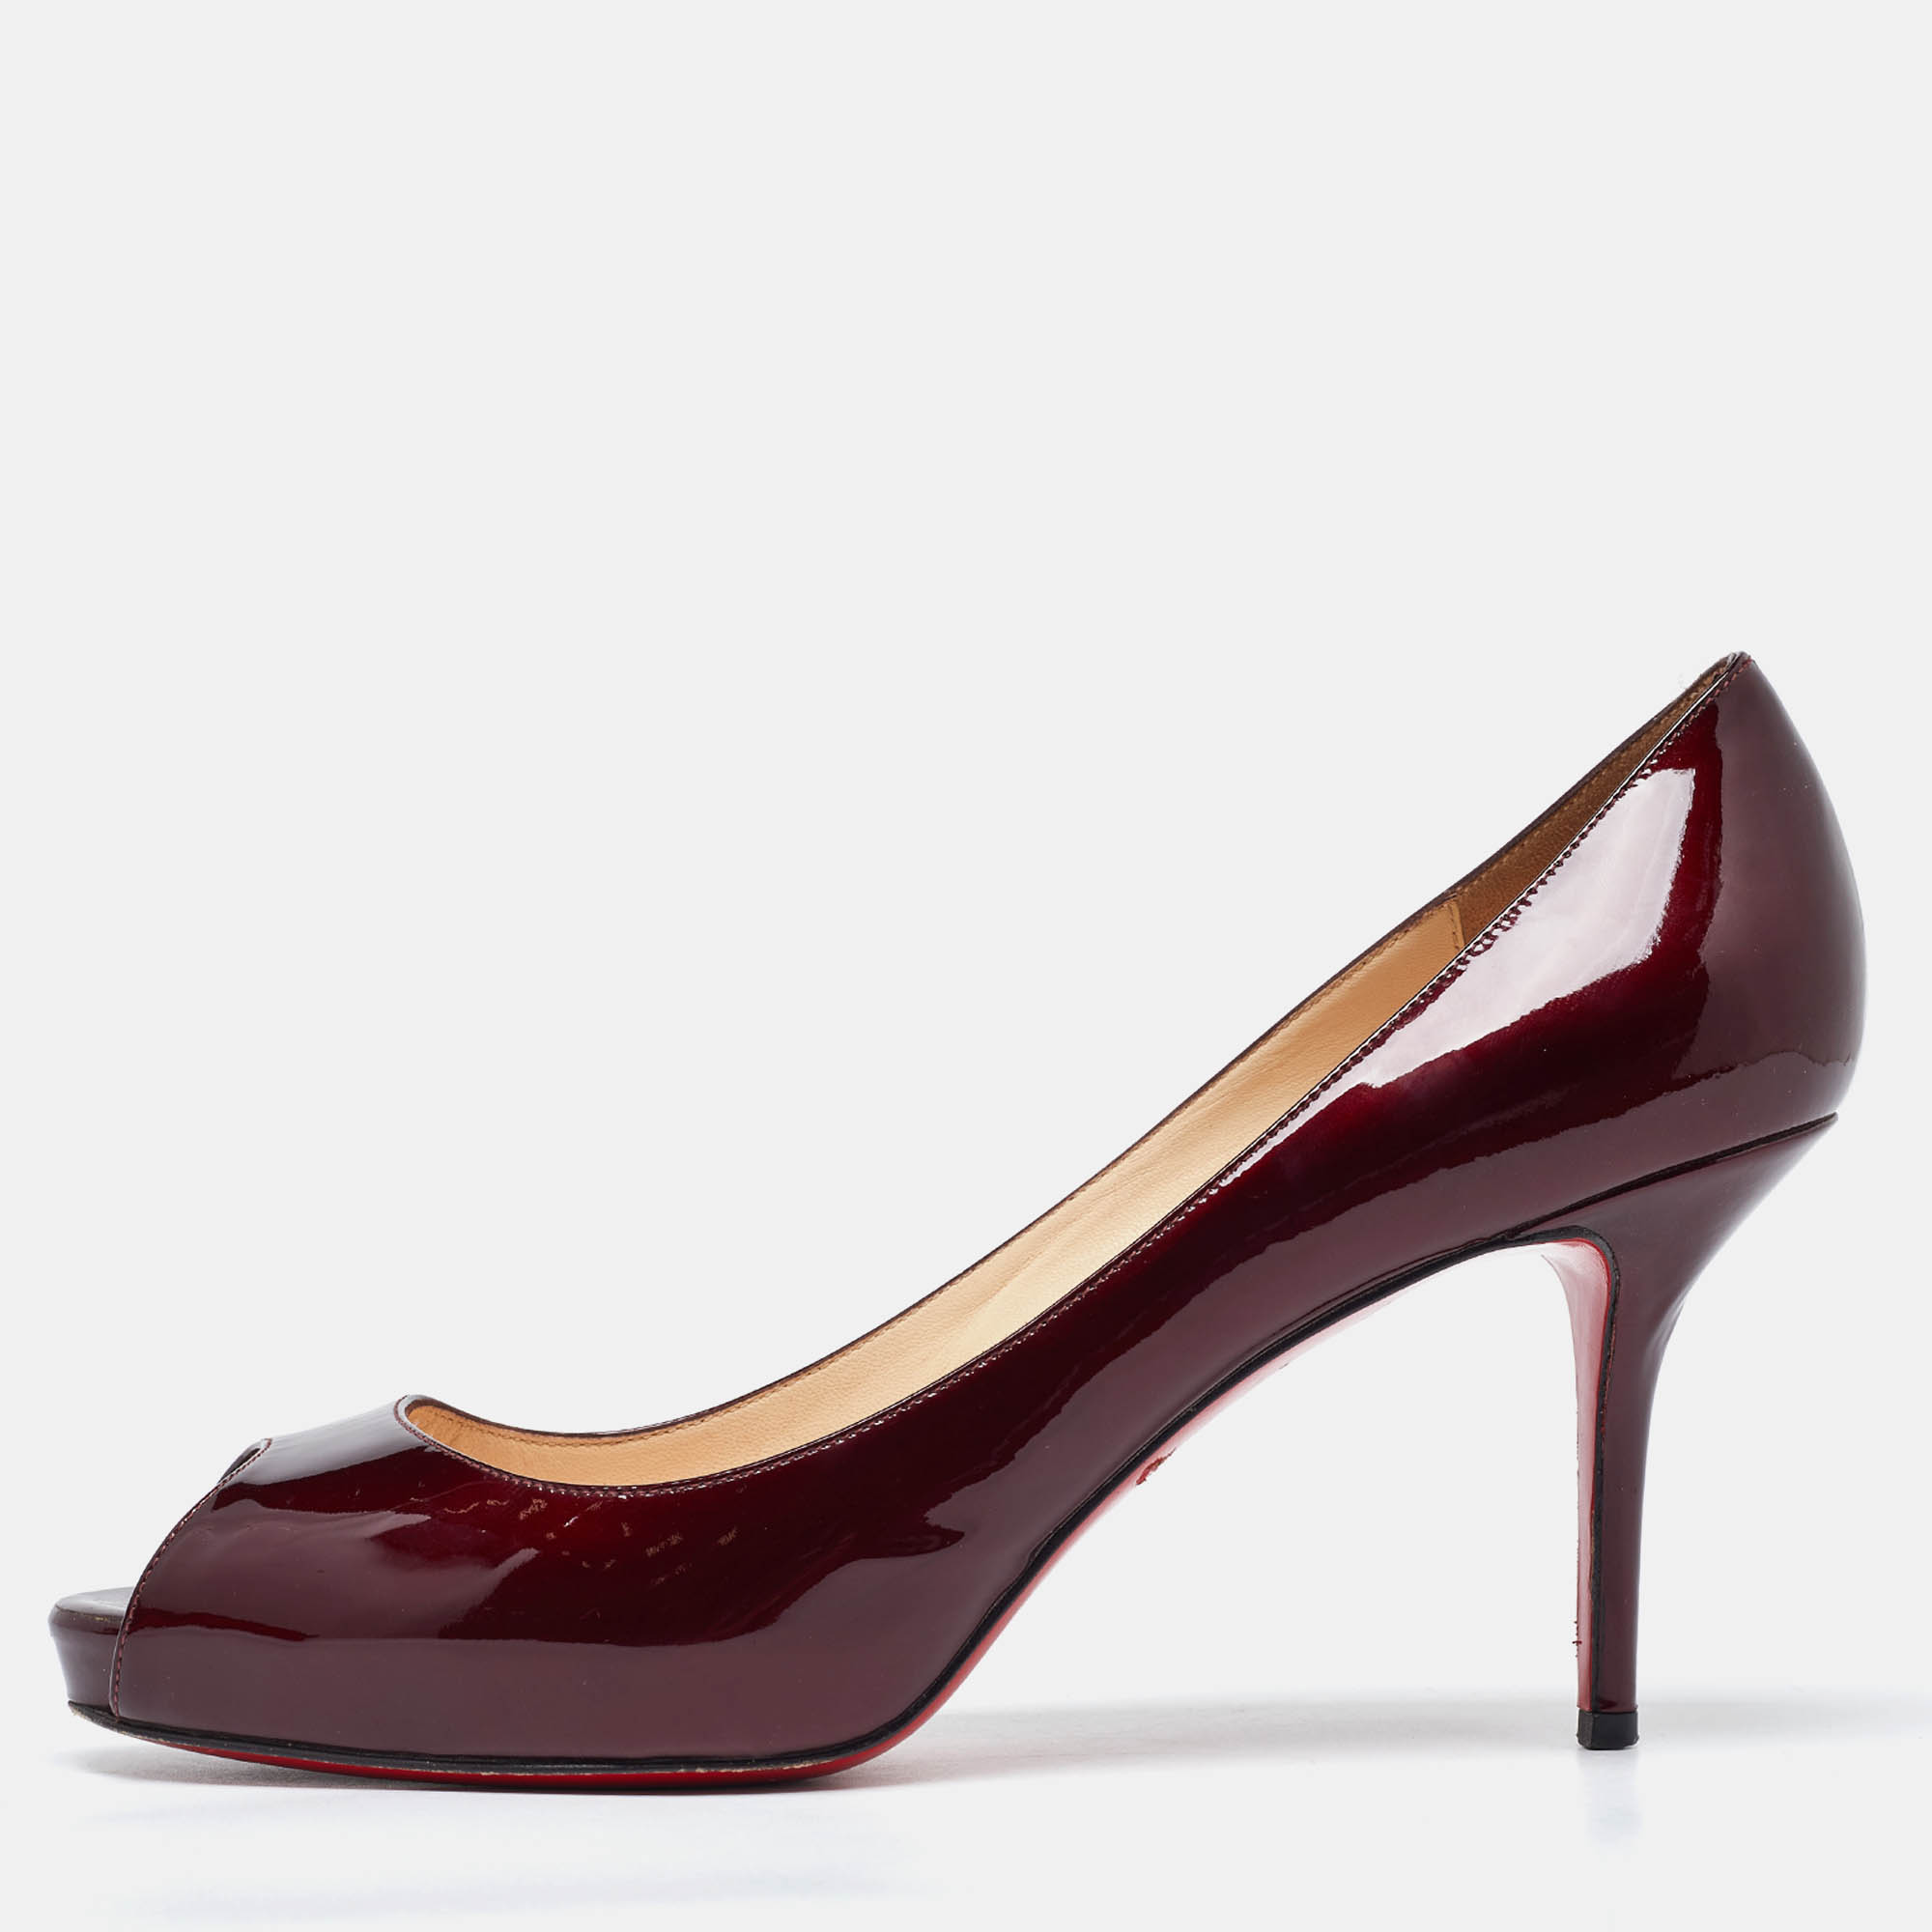 Christian louboutin burgundy patent leather lady claude peep toe pumps size 41